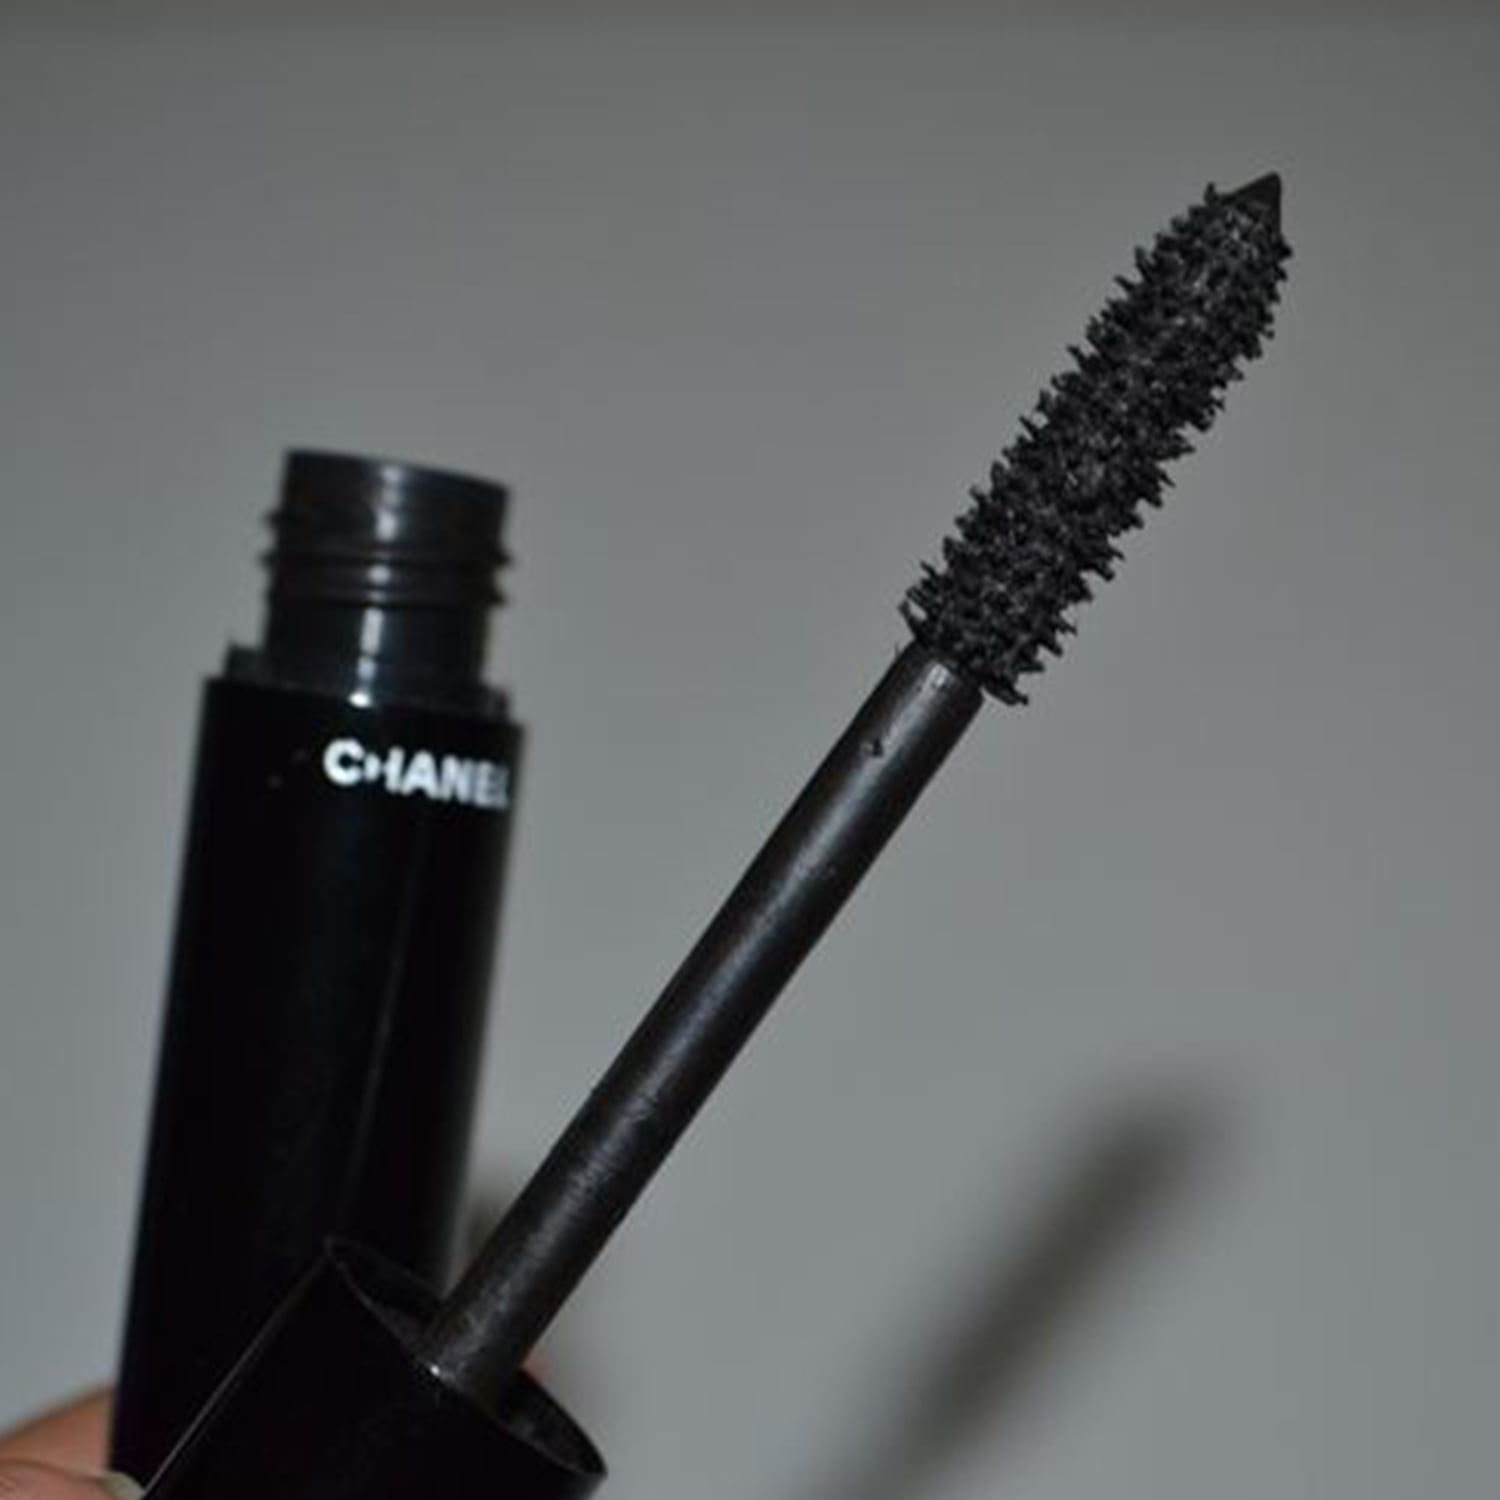 Chanel Le Volume Stretch Mini Mascara 10 Noir za 248 Kč od Reda  Allegro   11312105260